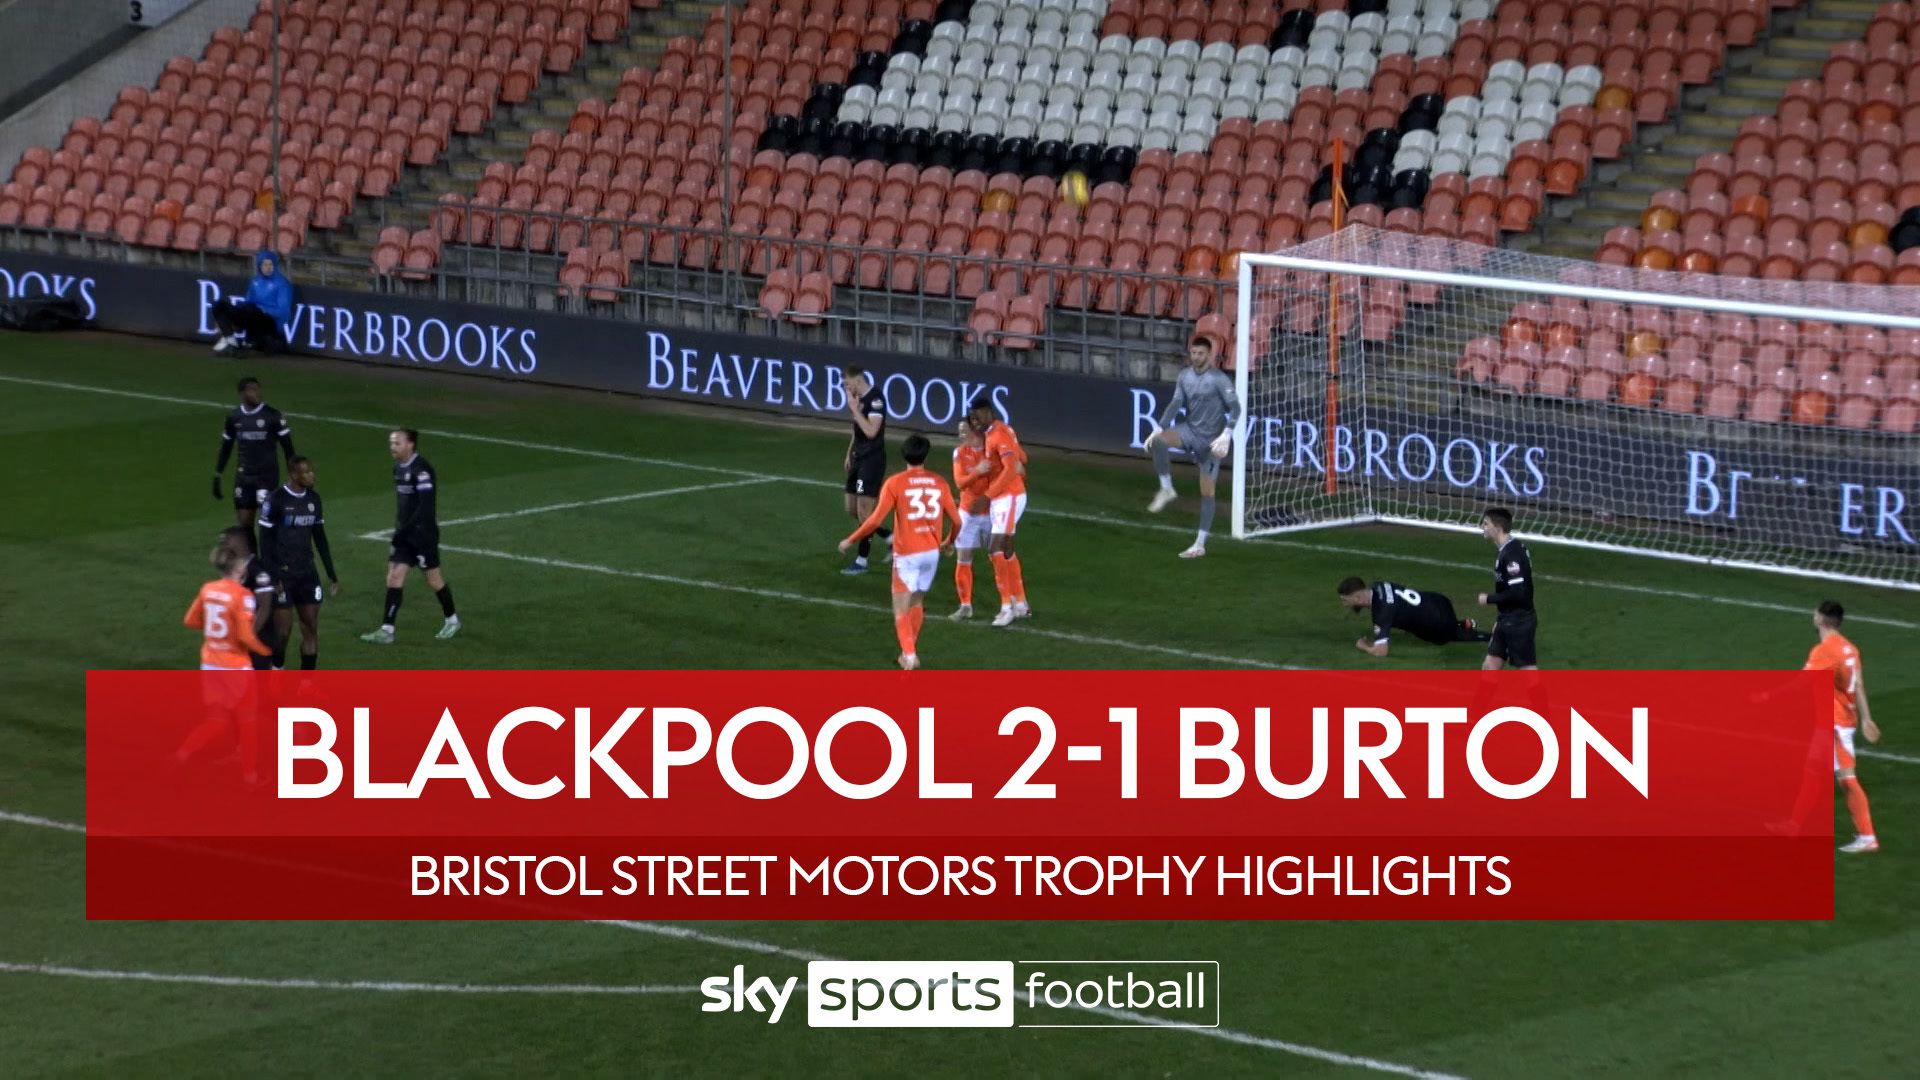 Blackpool 2-1 Burton